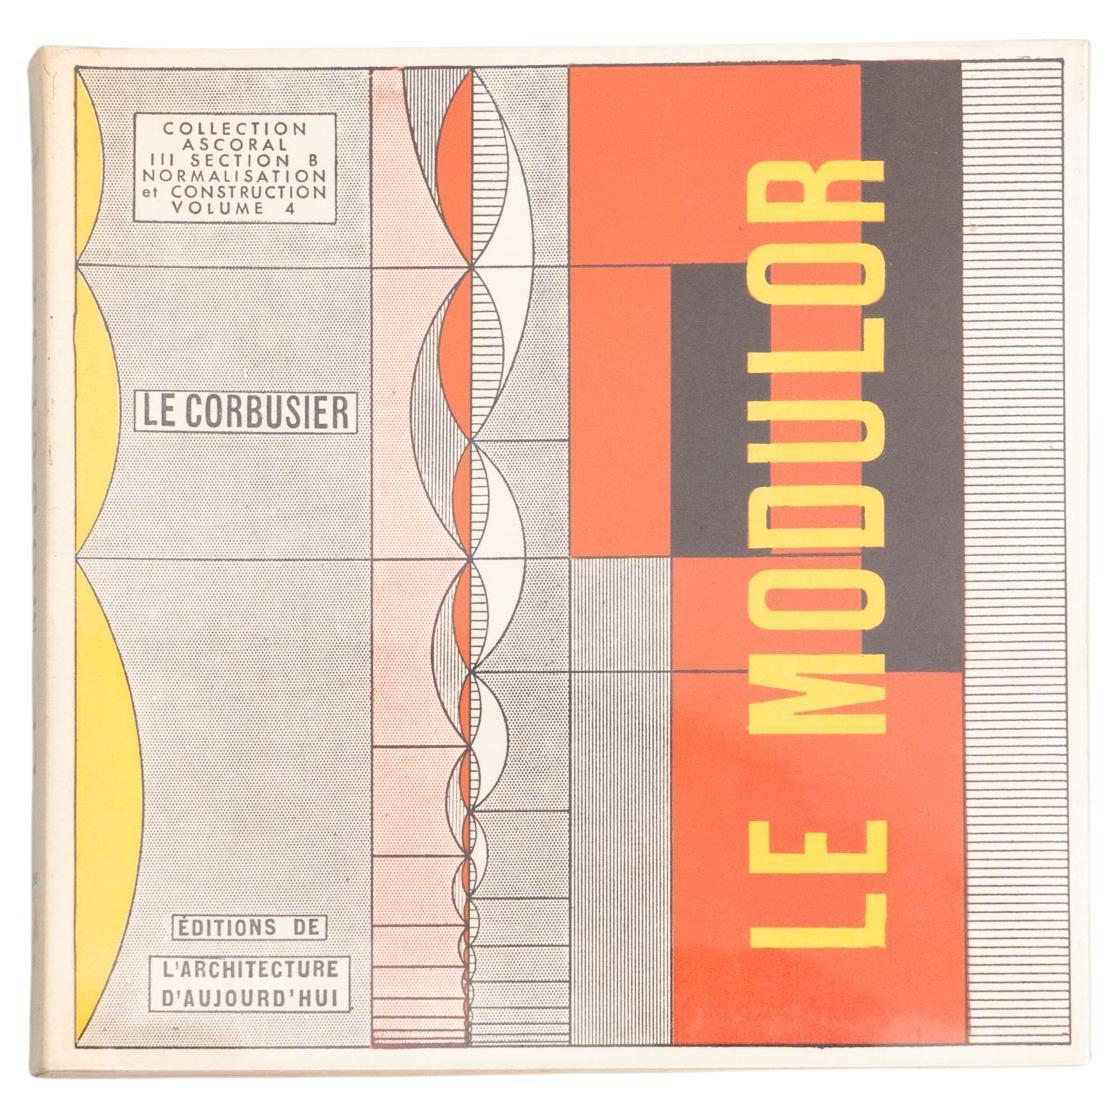 Le Corbusier, Buch „Der Modulor“, 1956